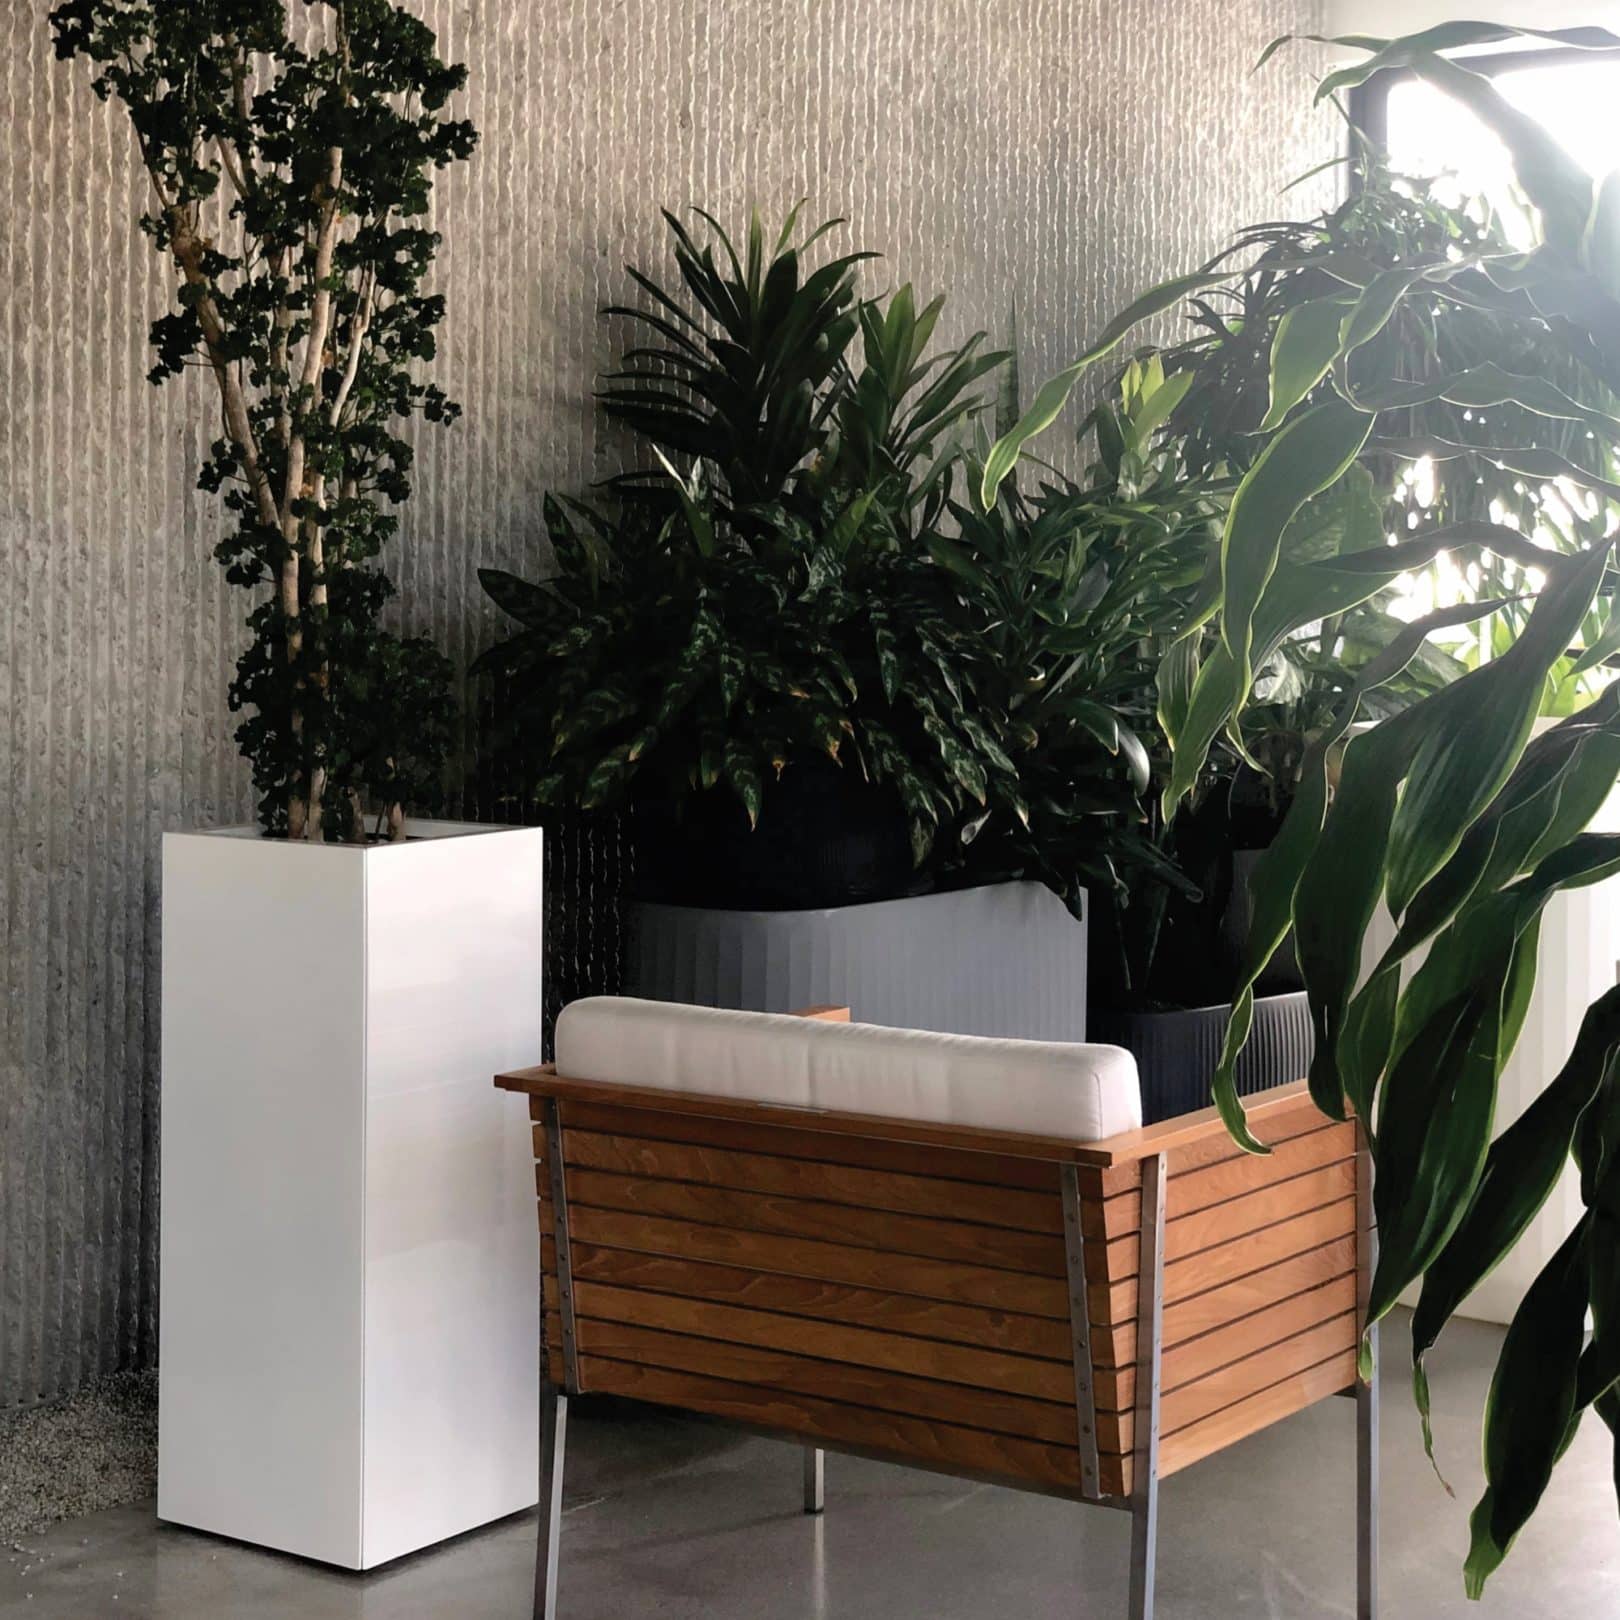 Tall Ferrum Square planter in white in tropical interior